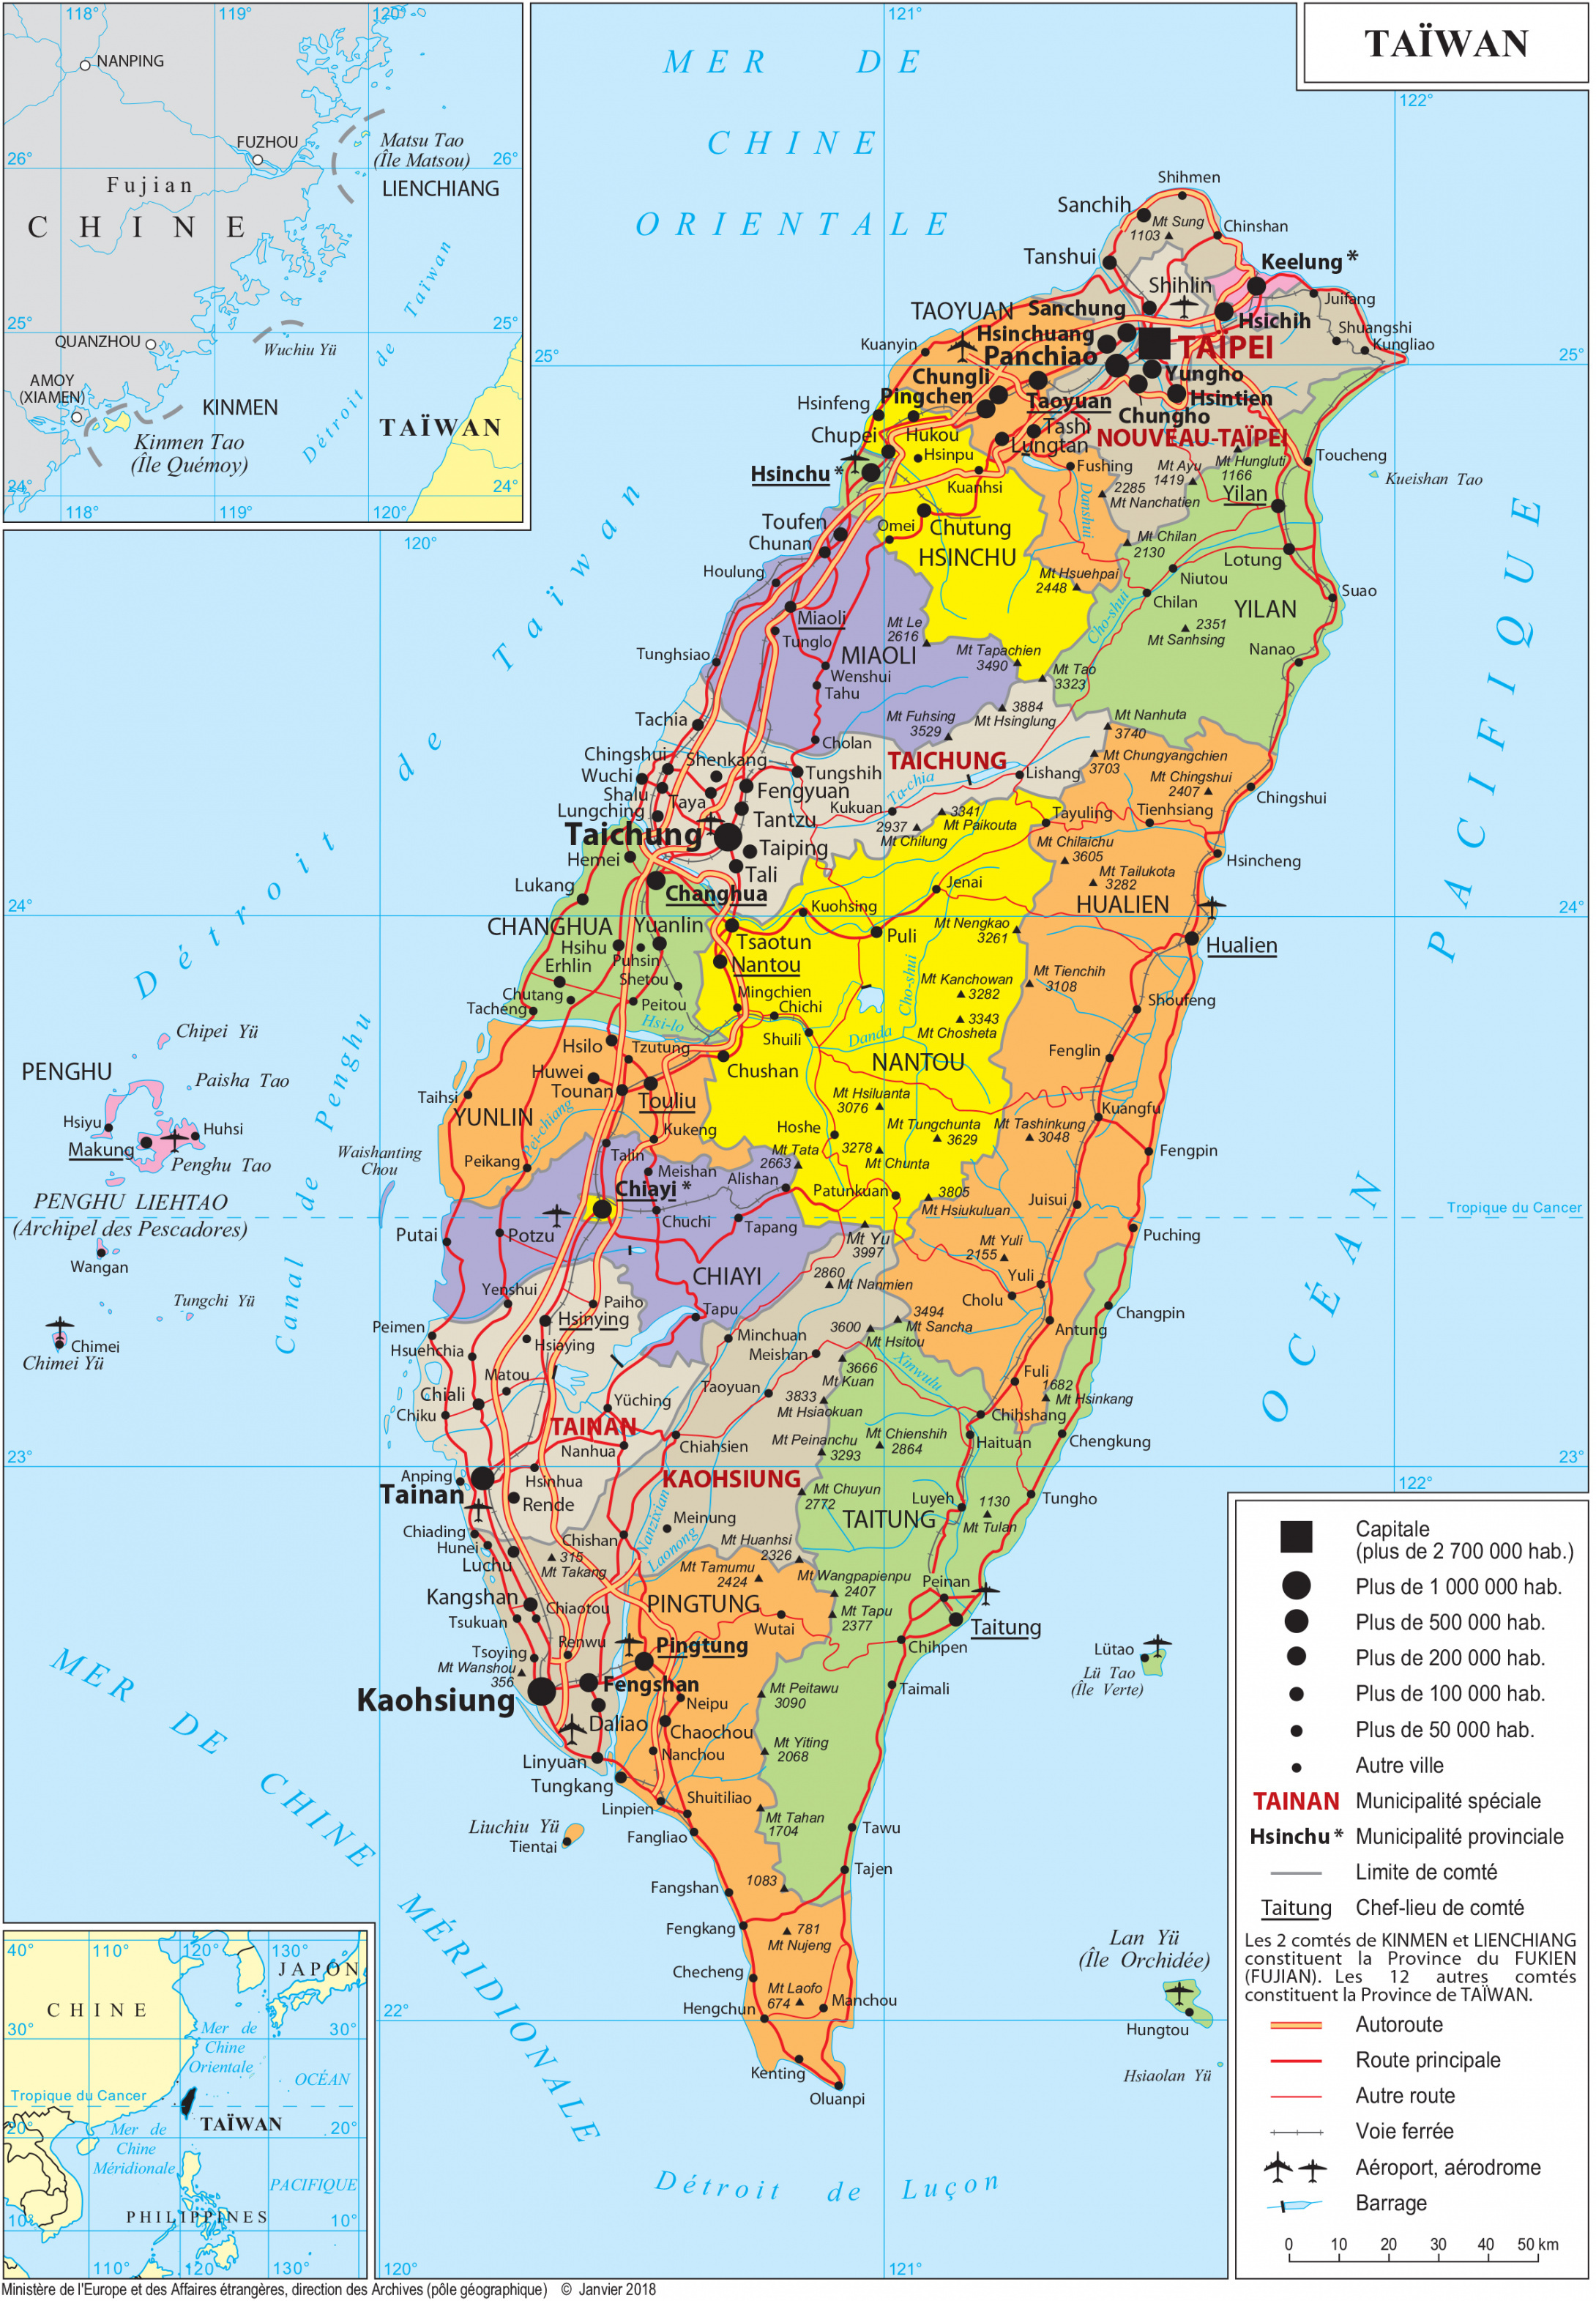 Geopolitical map of Taiwan, Taiwan maps | Worldmaps.info